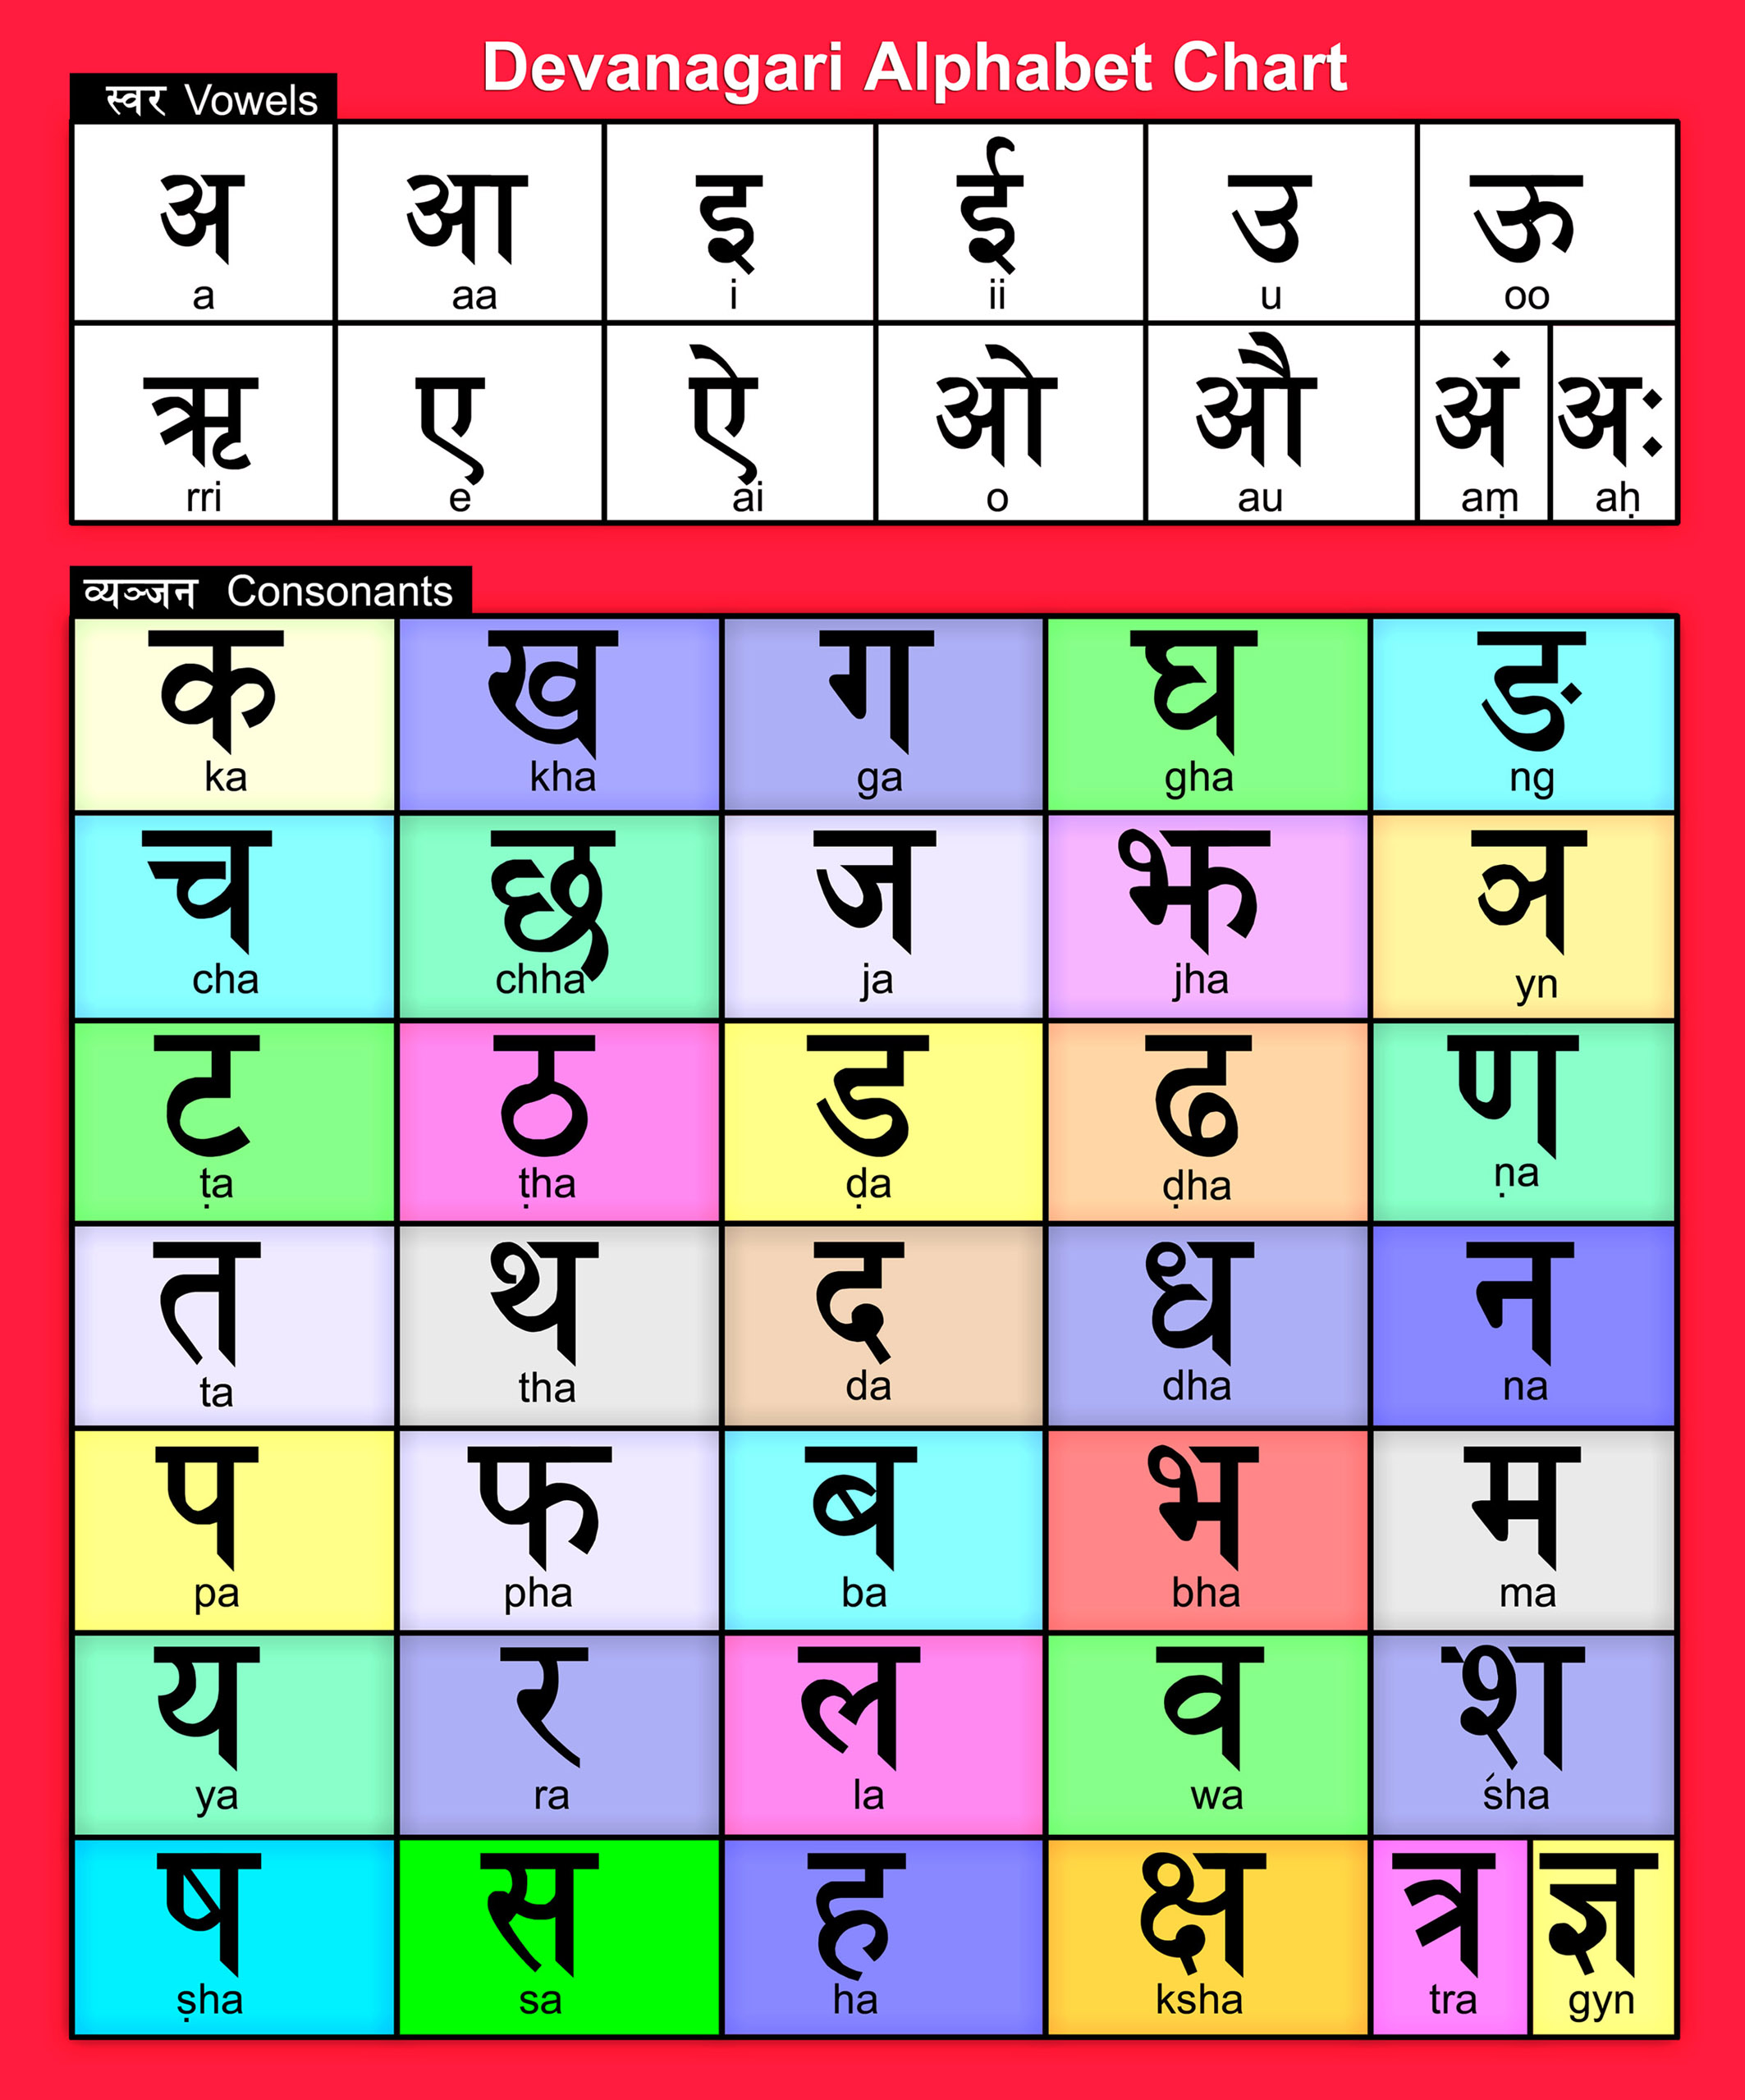 Nepali Alphabet Chart. Devanagari alphabets chart.